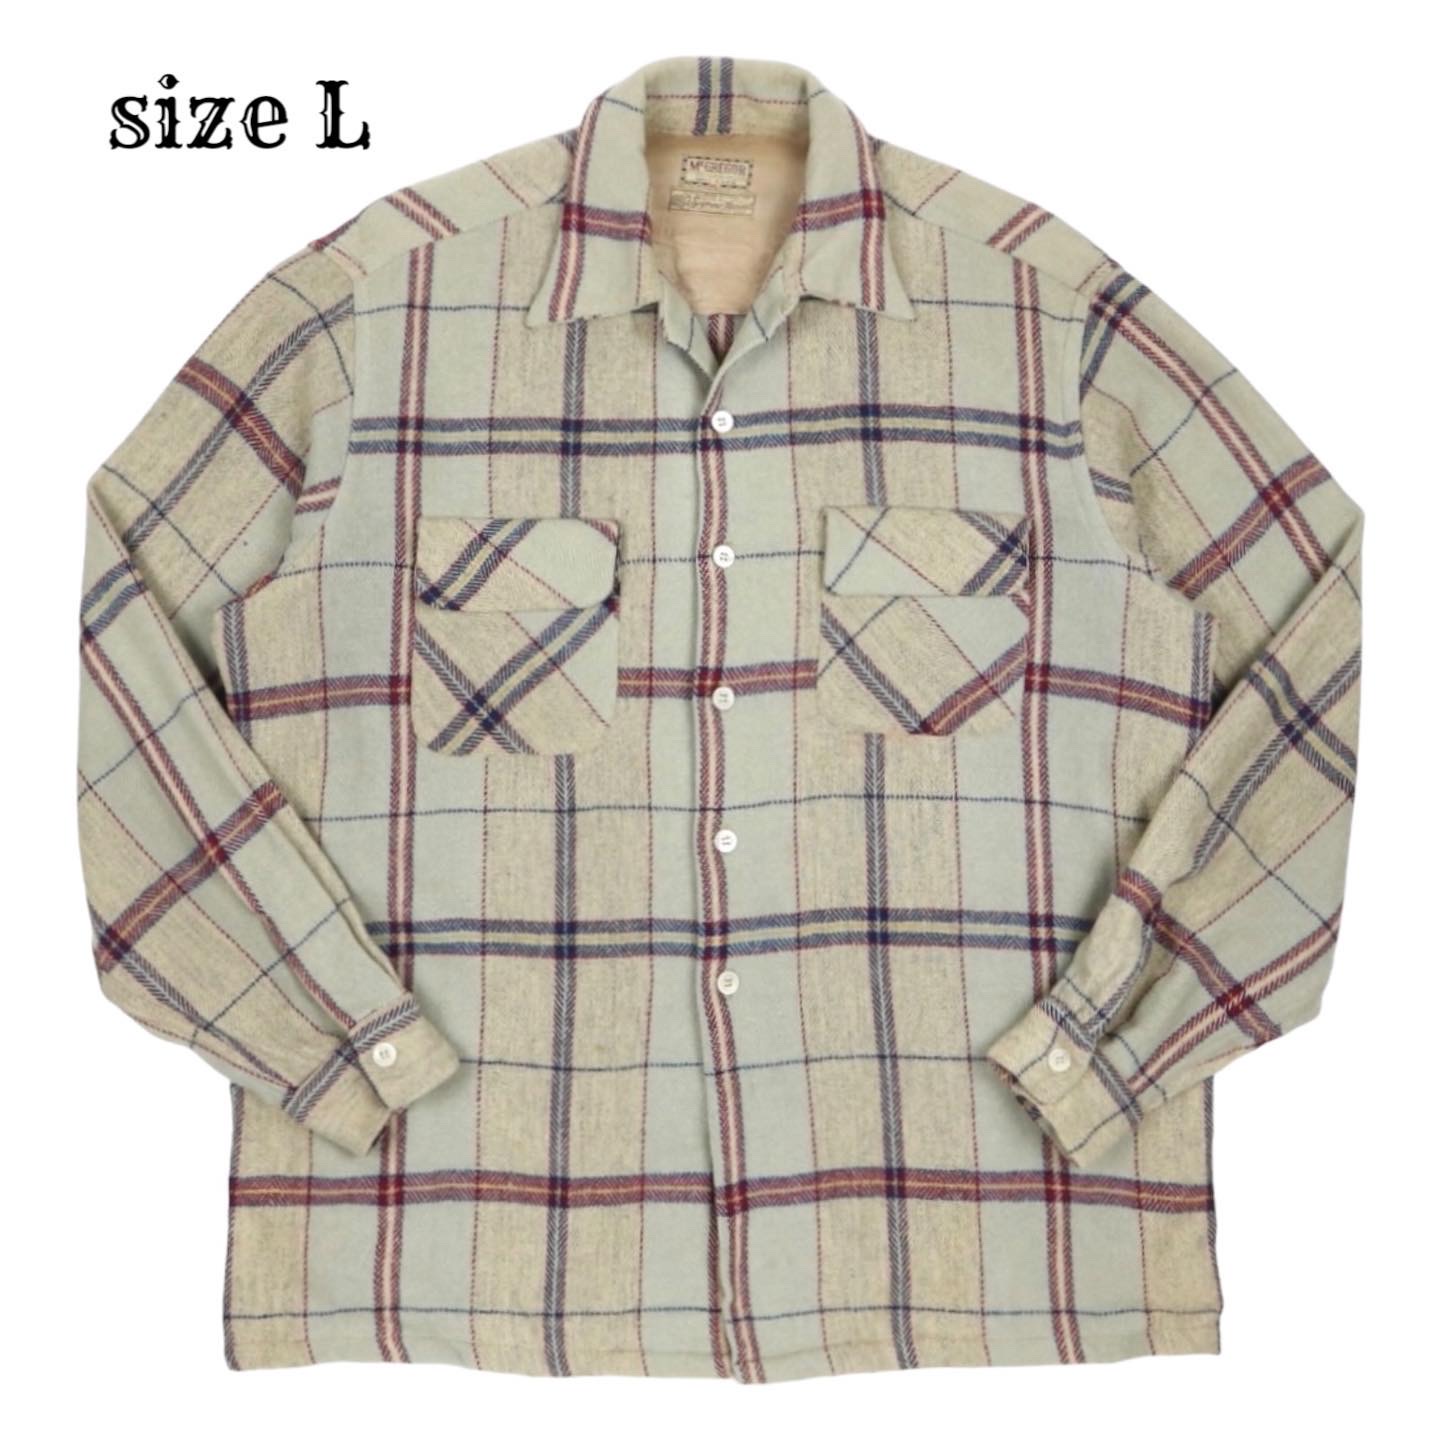 Vintage 50s McGregor Seymour Wool Shirt Size L